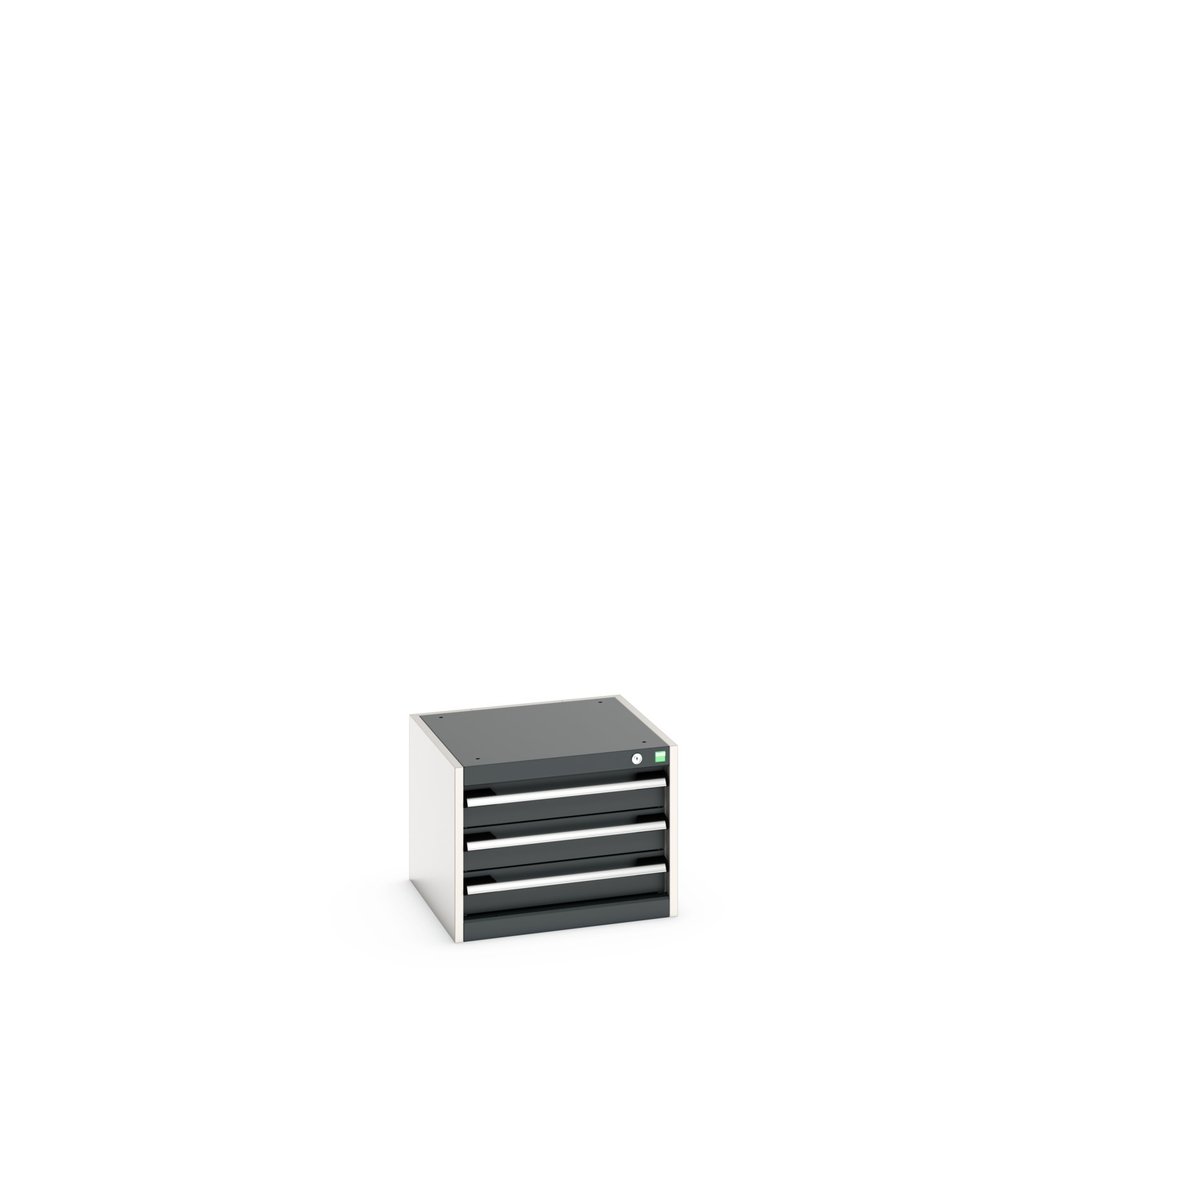 40010009. - cubio drawer cabinet